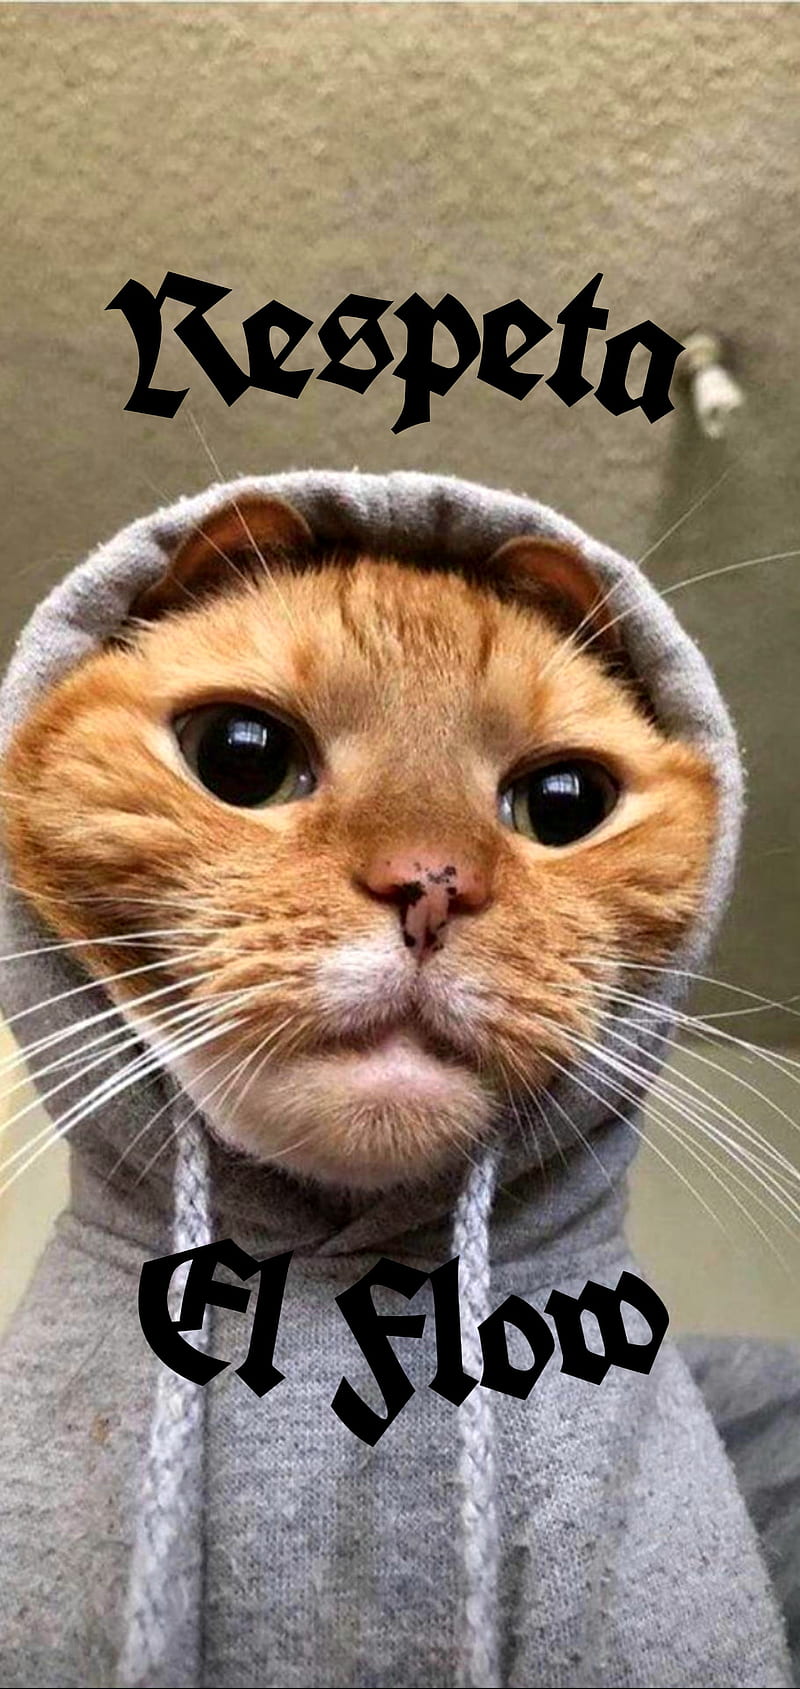 Meet 'Big Floppa' - the hero of the most popular cat meme of 2020